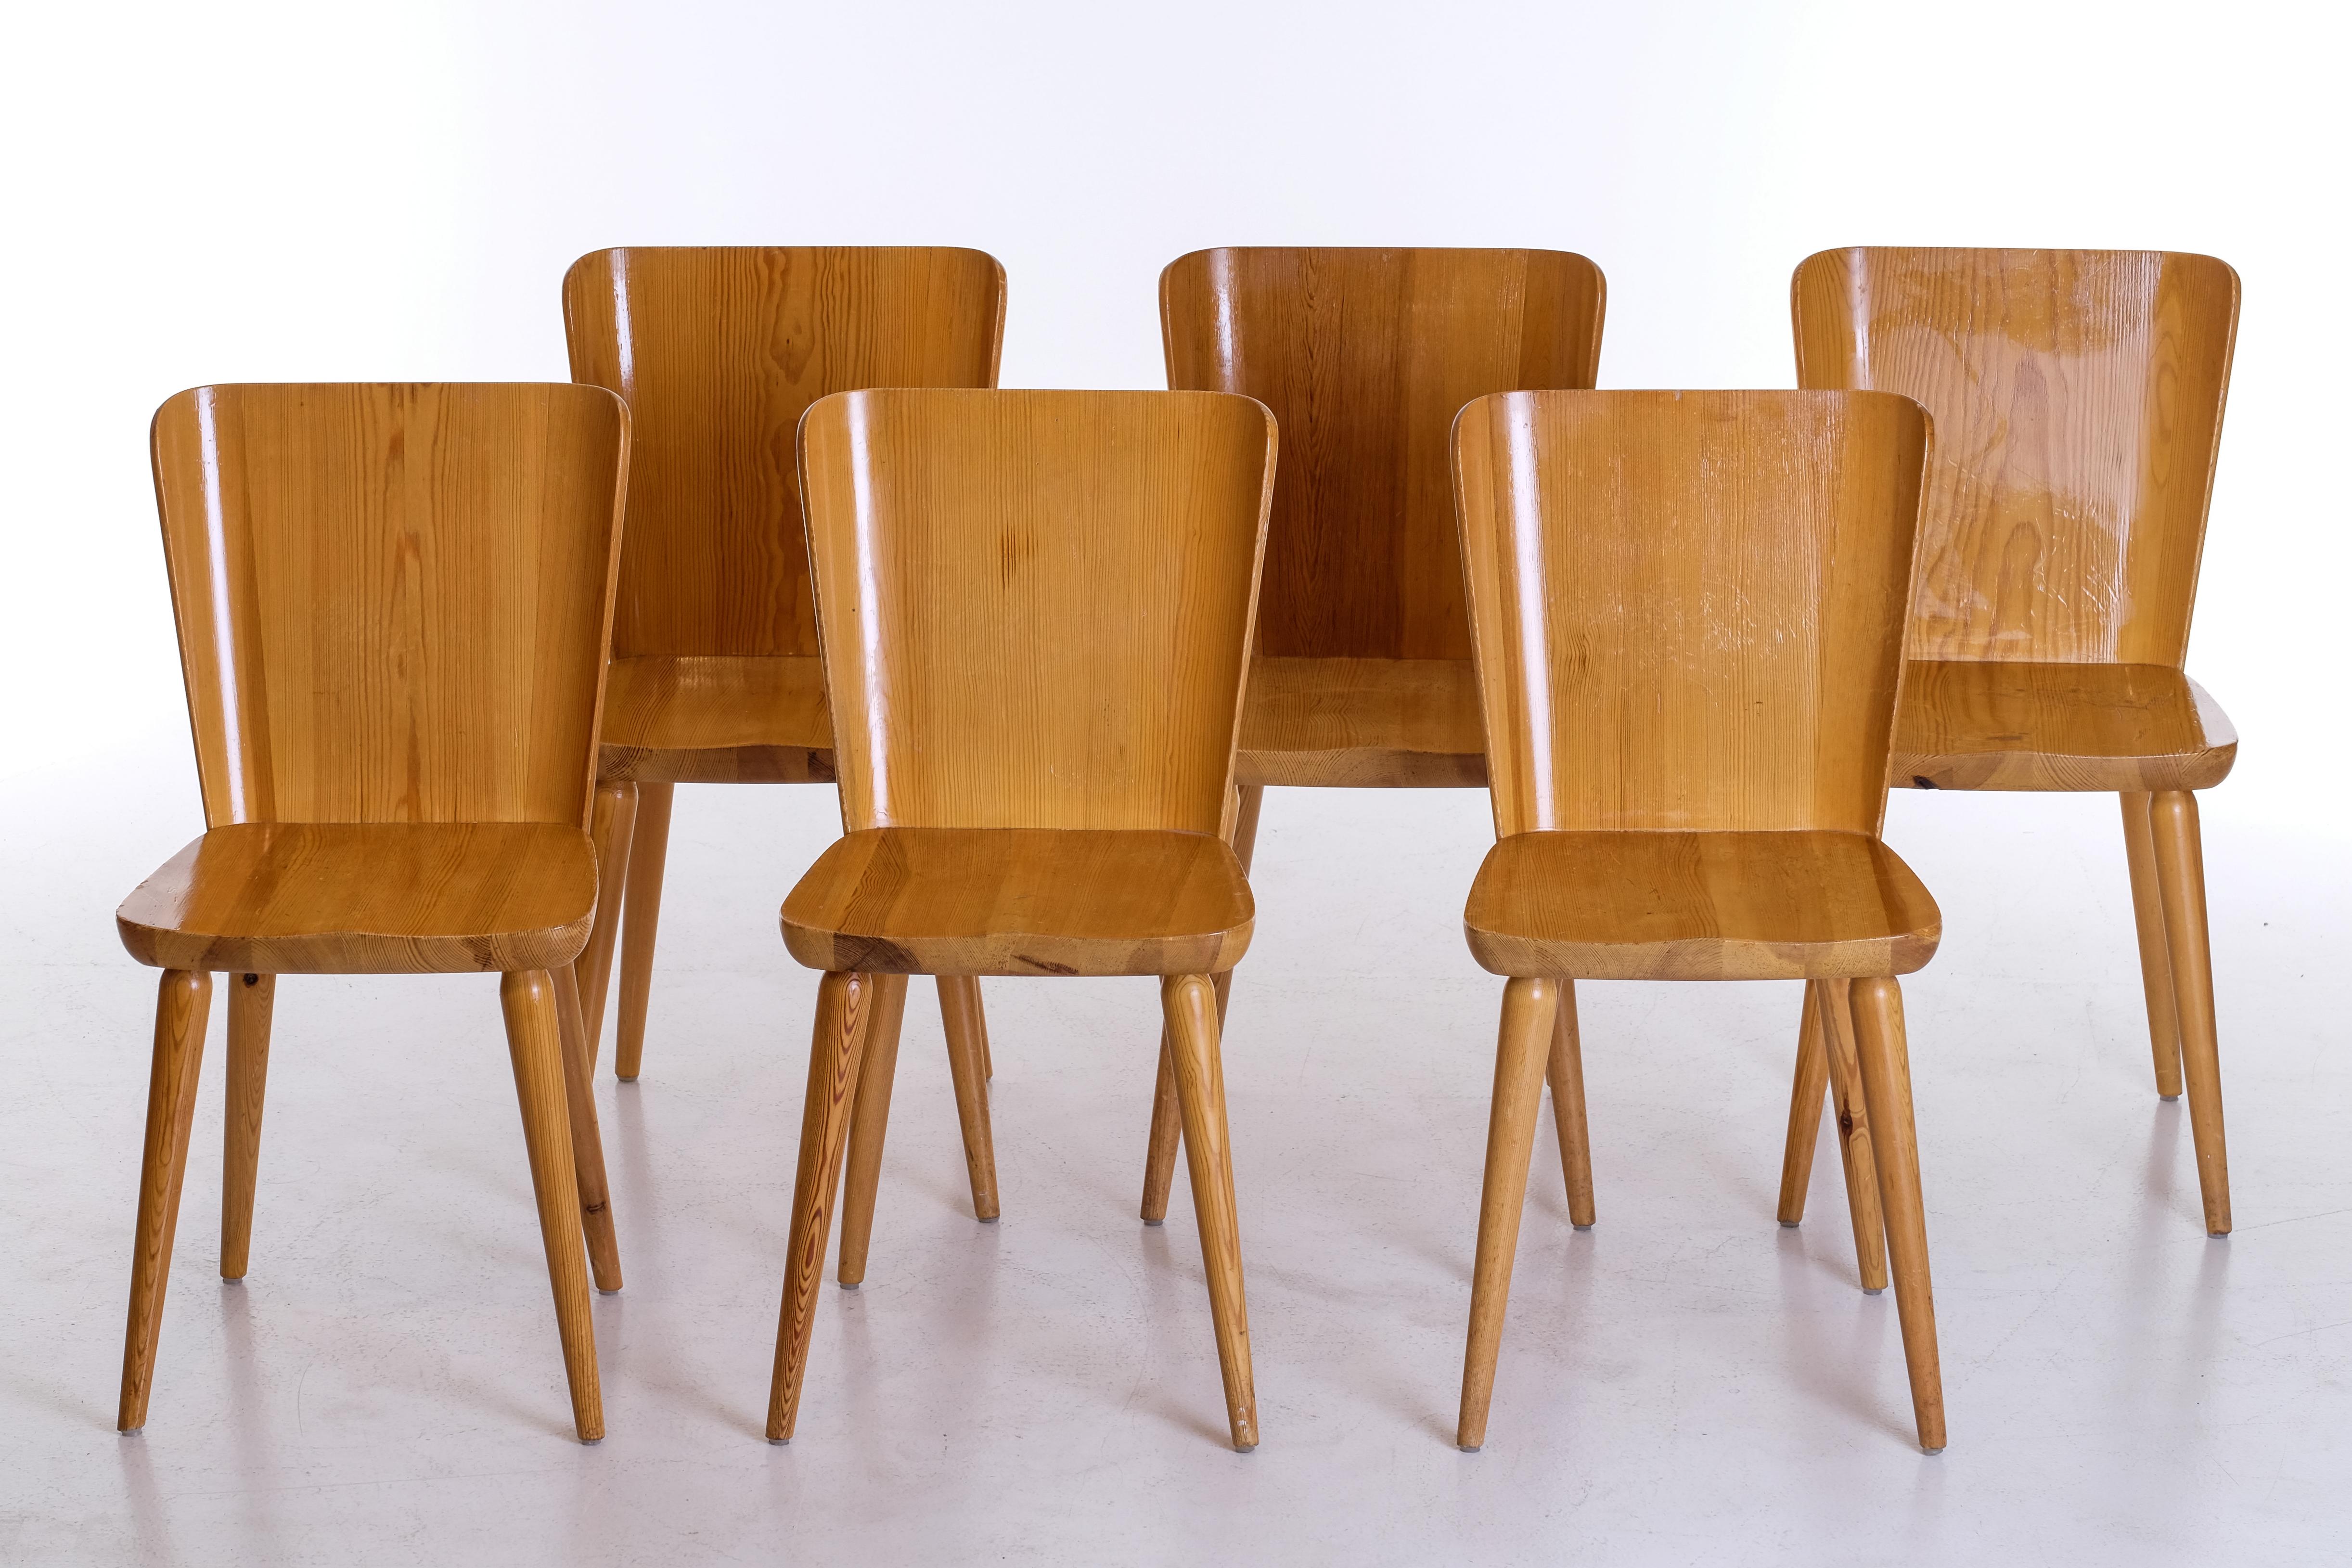 Set of 6 Swedish Pine Chairs by Göran Malmvall, Svensk Fur, 1960s For Sale 3